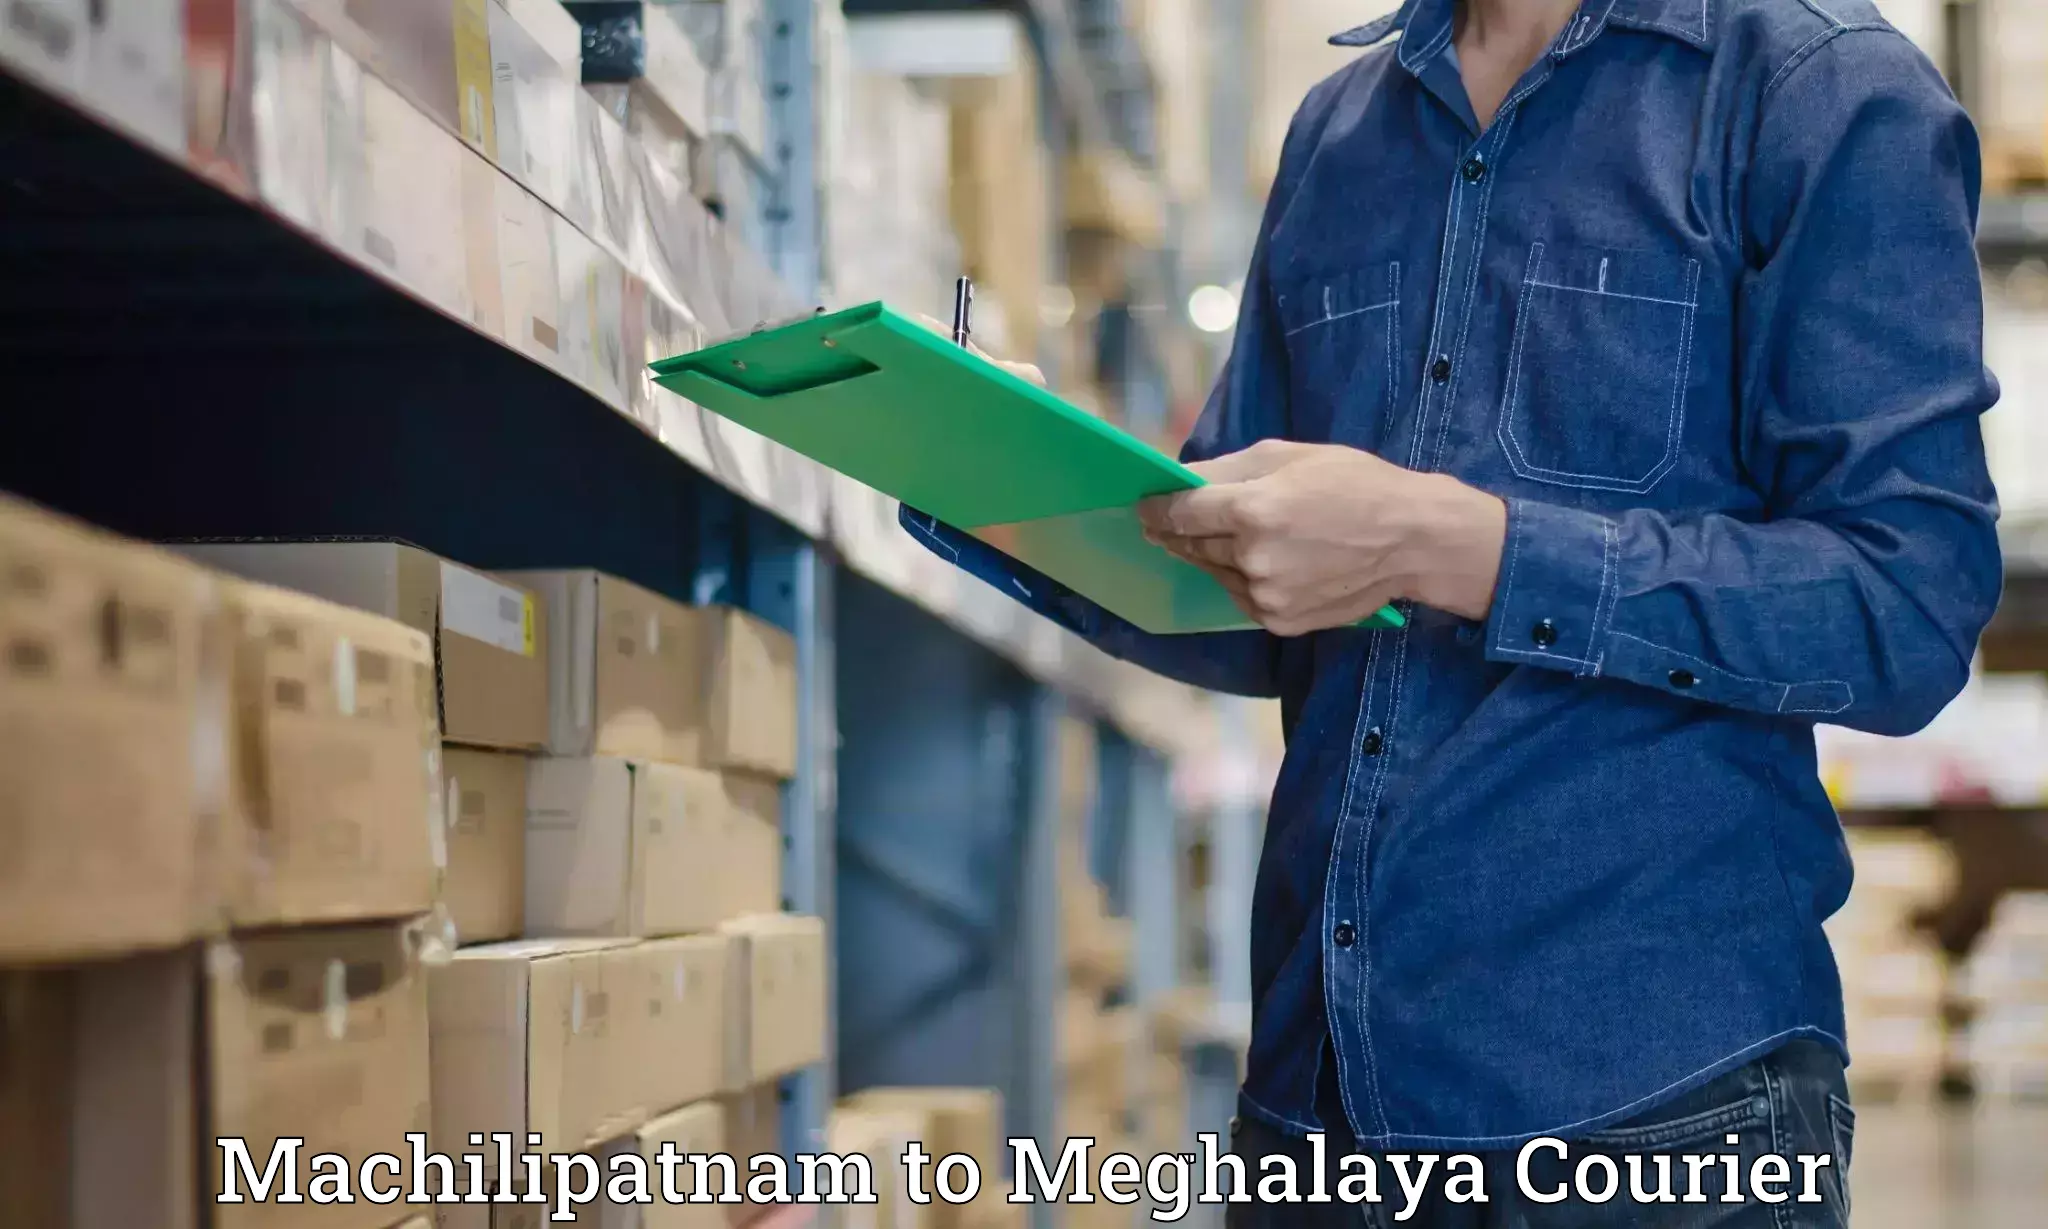 Digital courier platforms Machilipatnam to Meghalaya